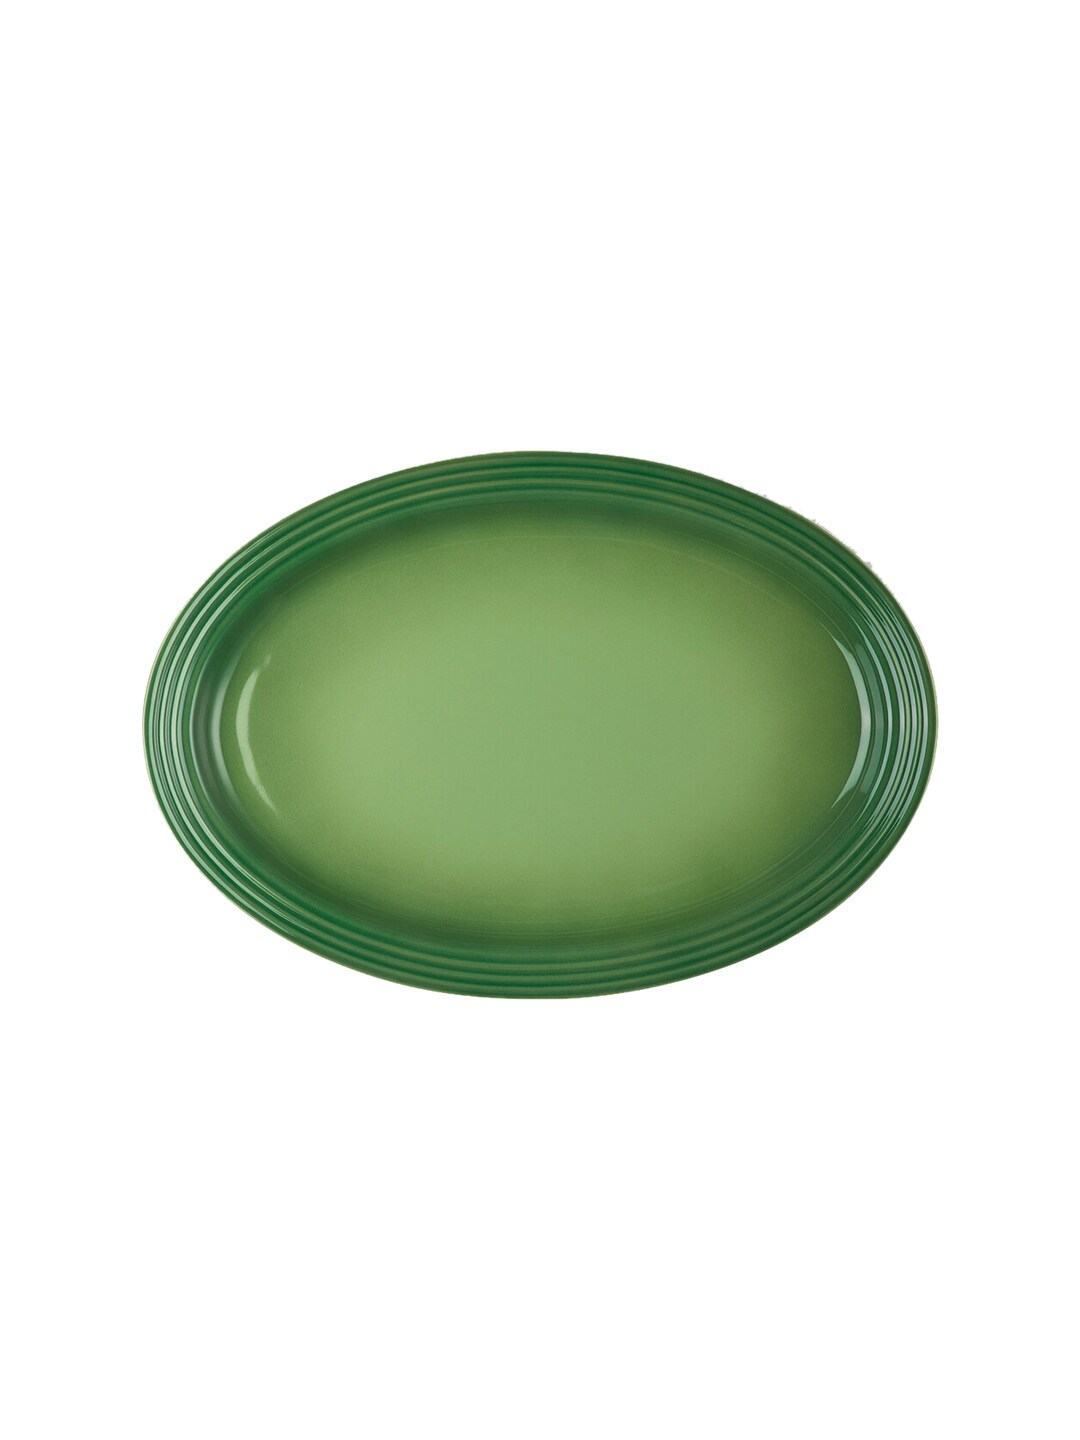 LE CREUSET Green Van Oval Serveware Platter Price in India